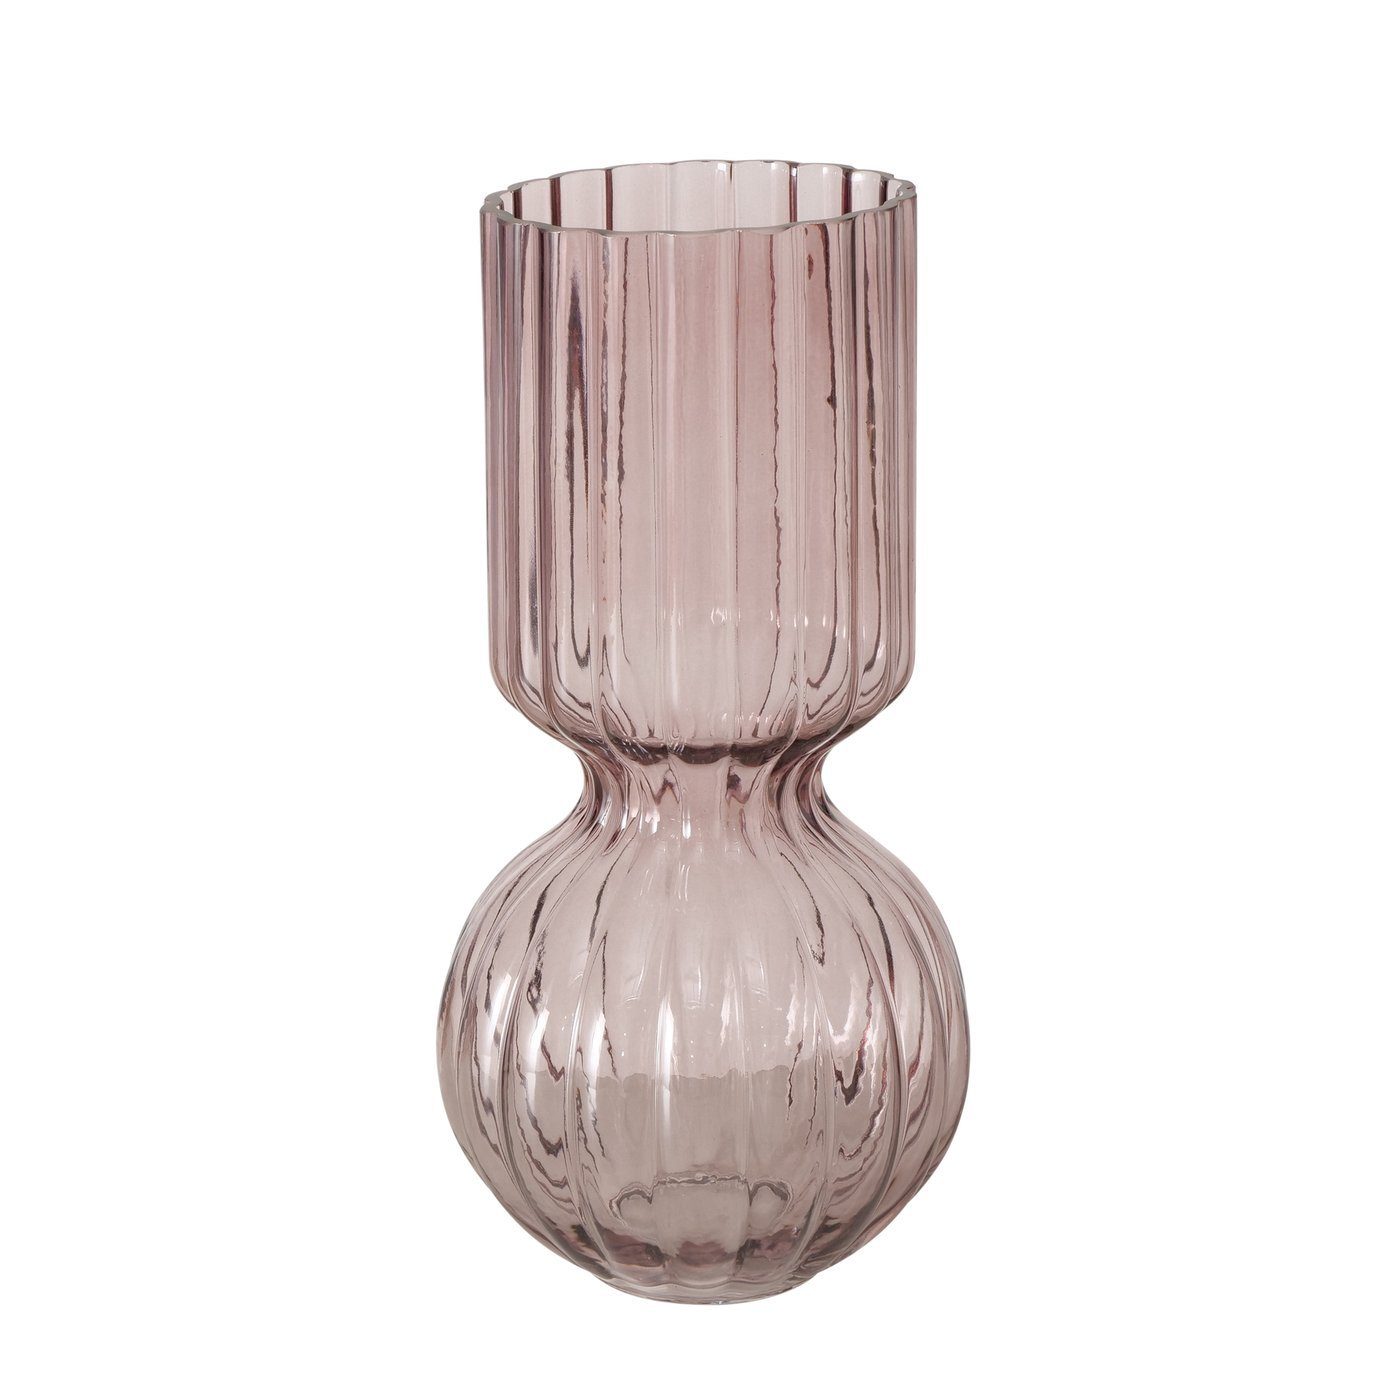 BOLTZE Dekovase "Kalea" aus Glas H30cm, dukelrosa in Vase